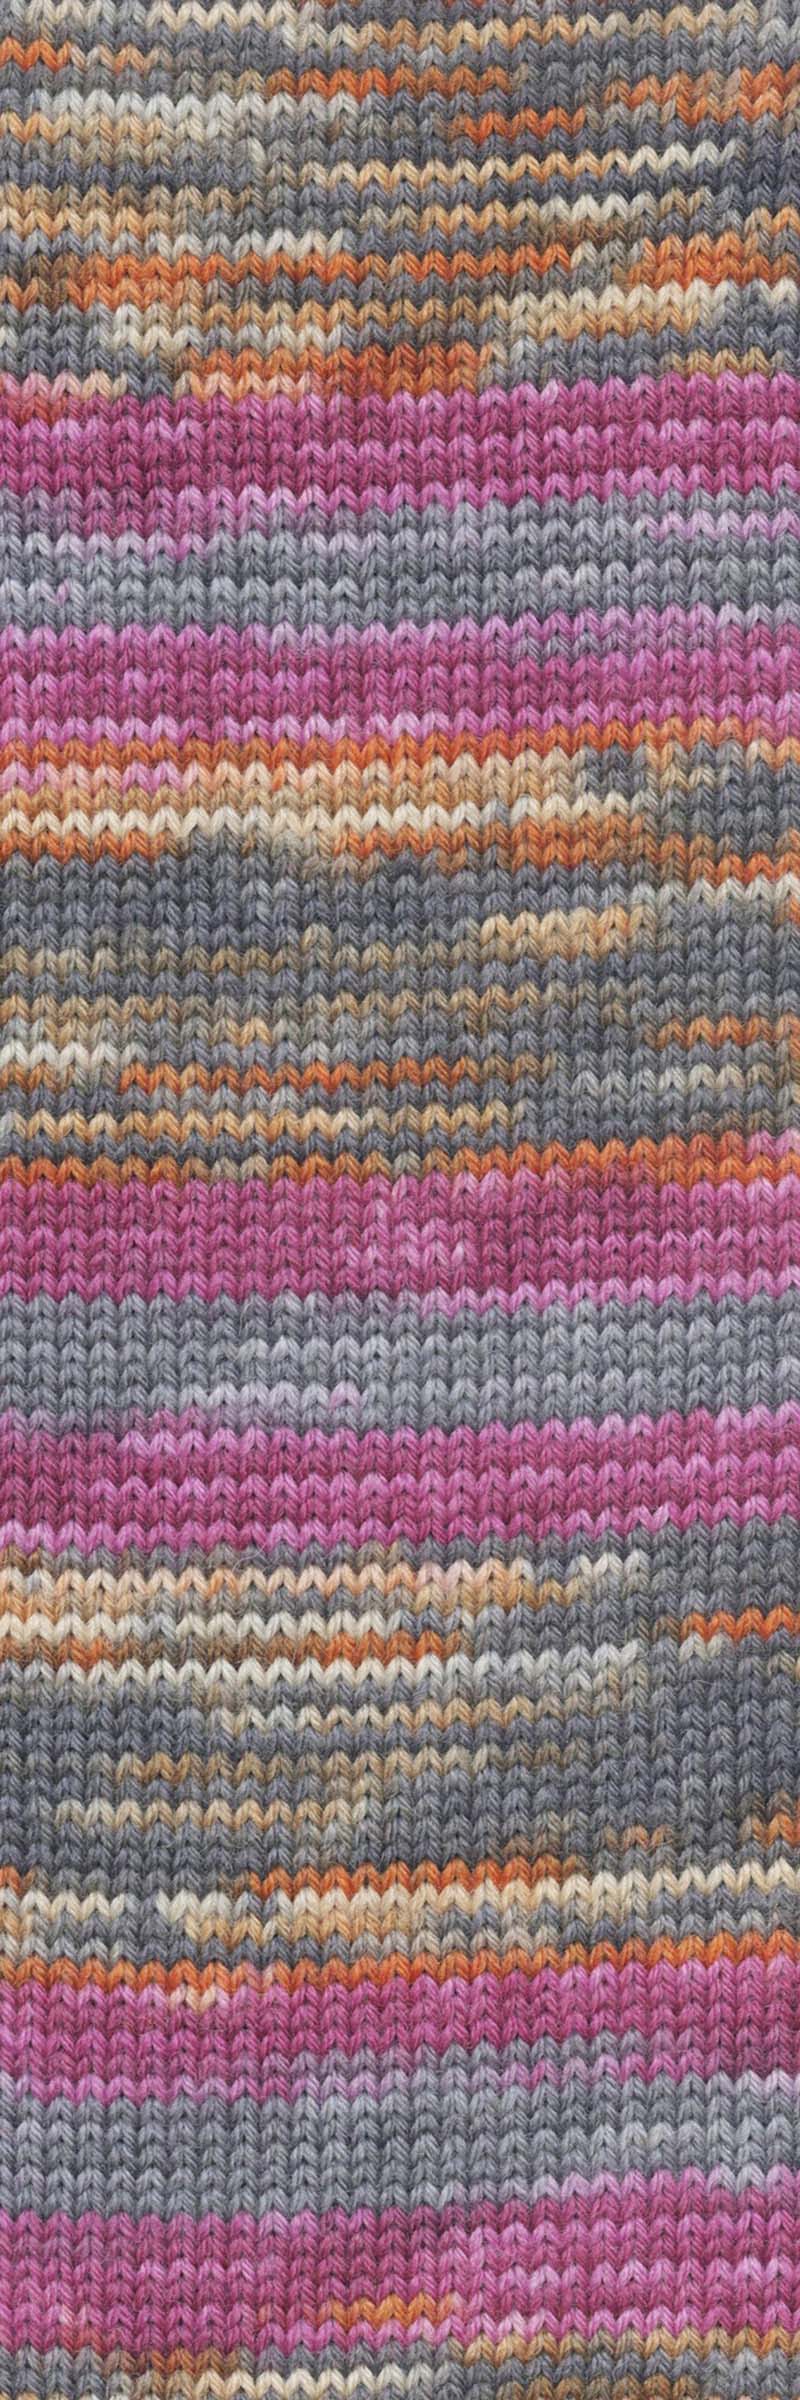 Wooladdicts Move yarn color multi